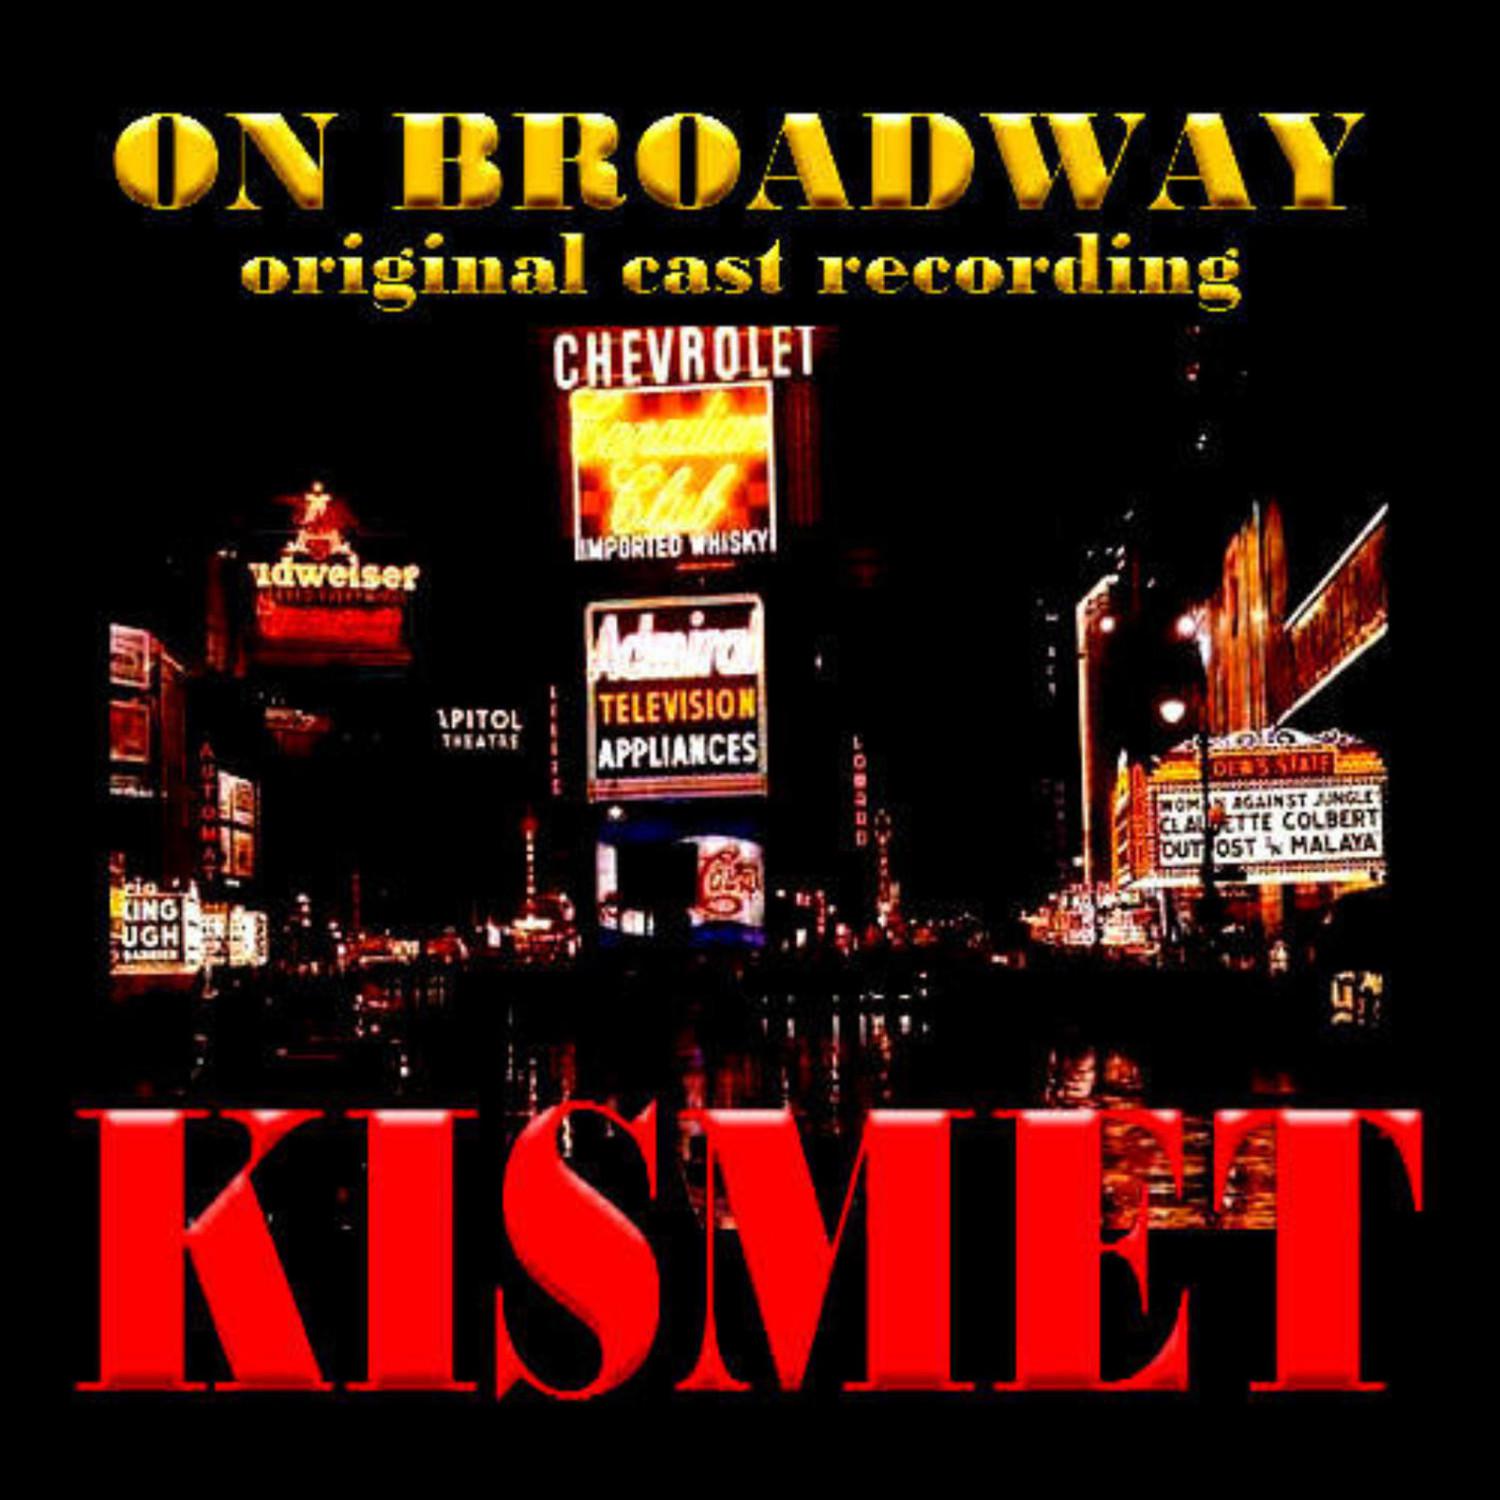 Kismet On Broadway